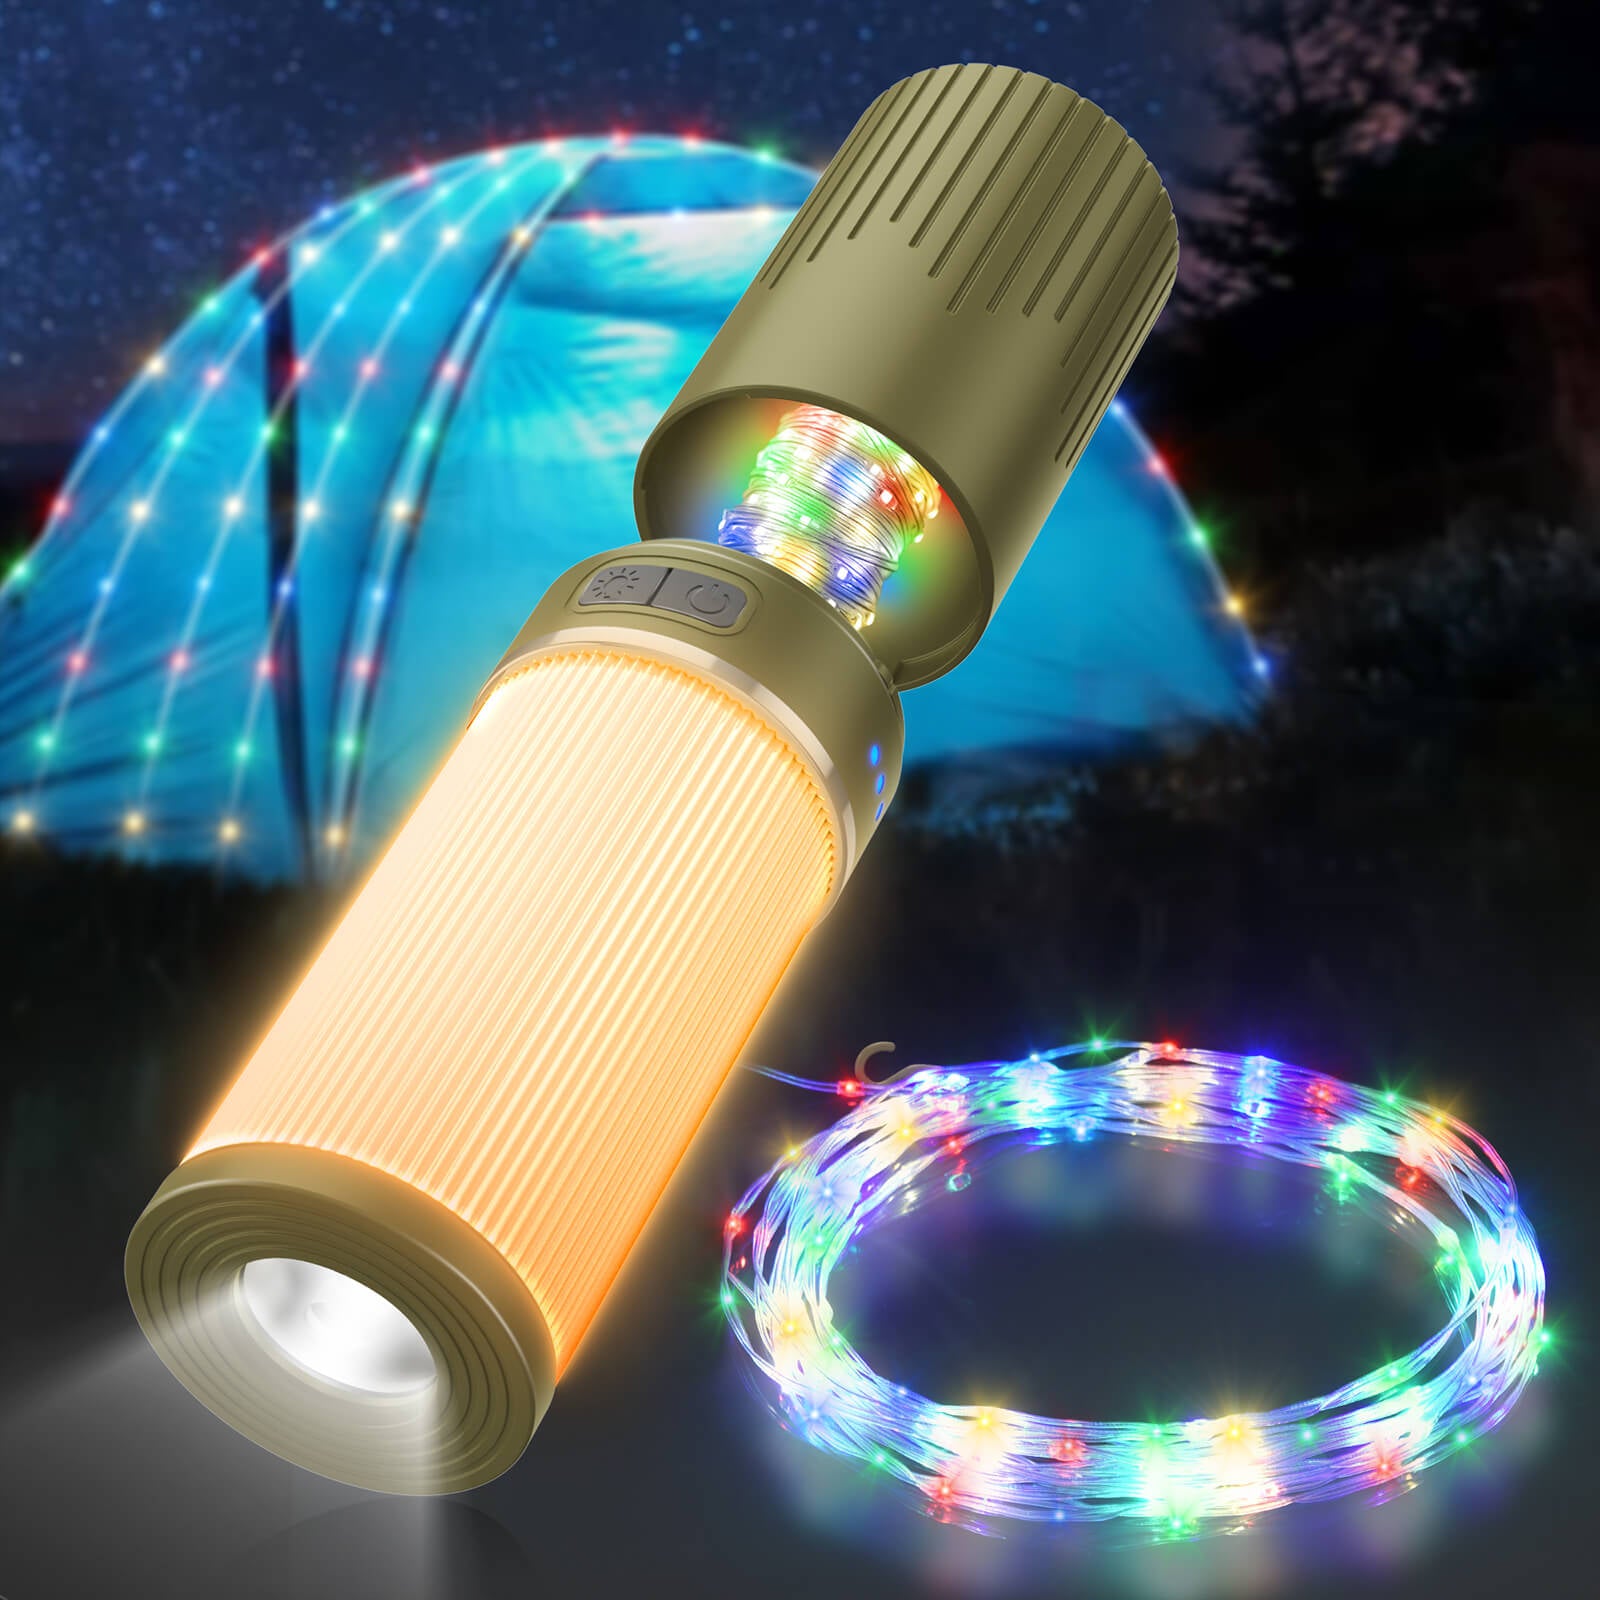 Camping String Light 49ft / Lantern / Flashlight / Portable Nightstand